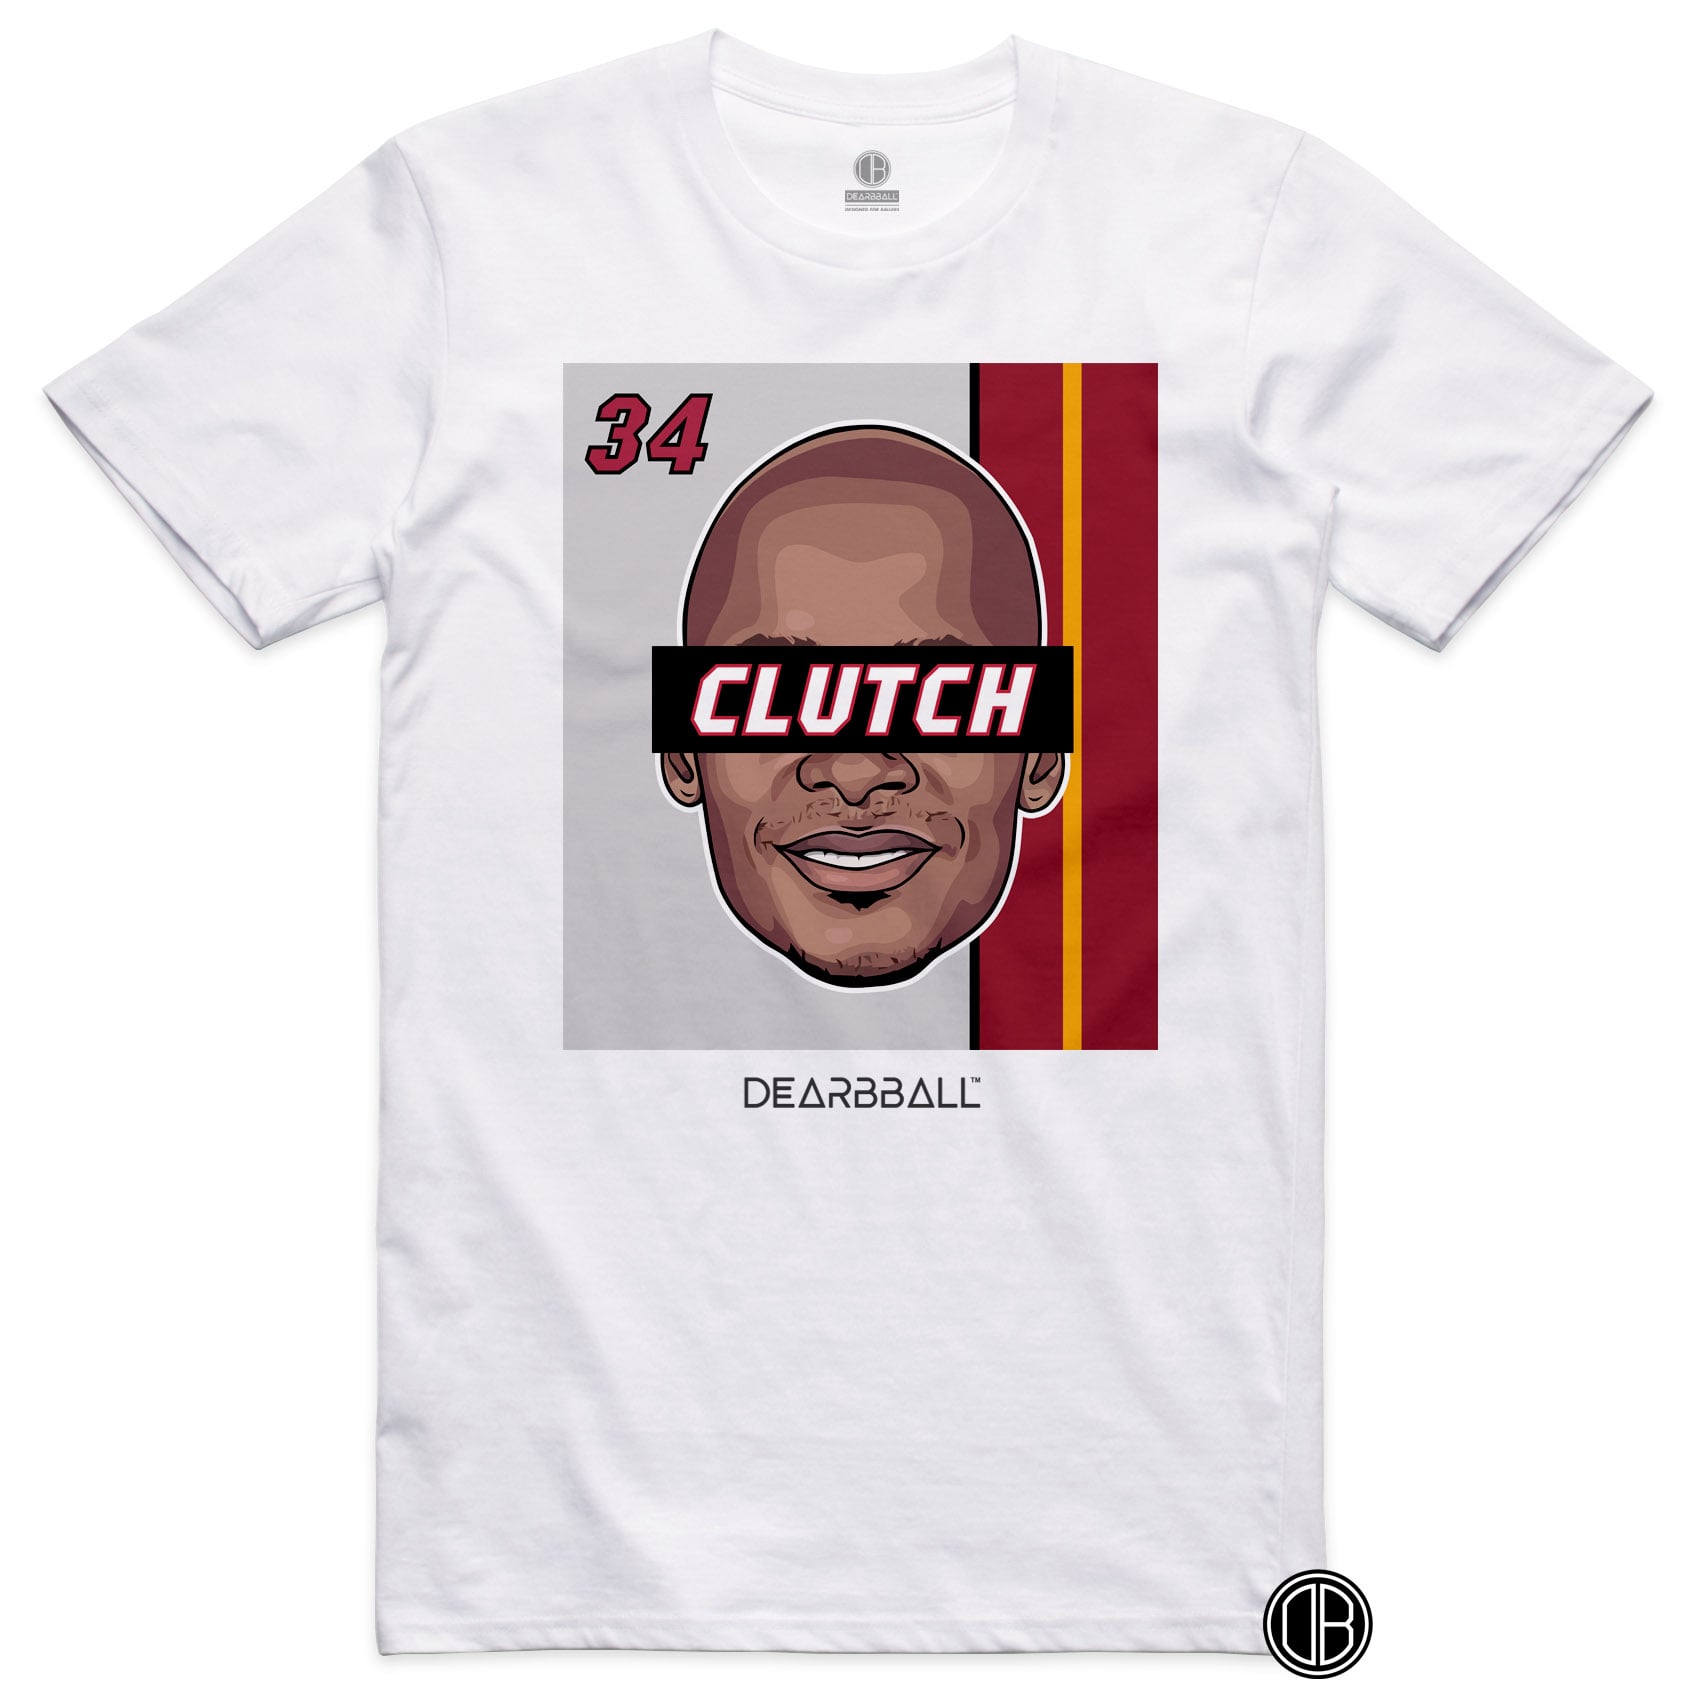 DearBBall T-Shirt - CLUTCH 34 Miami Edition